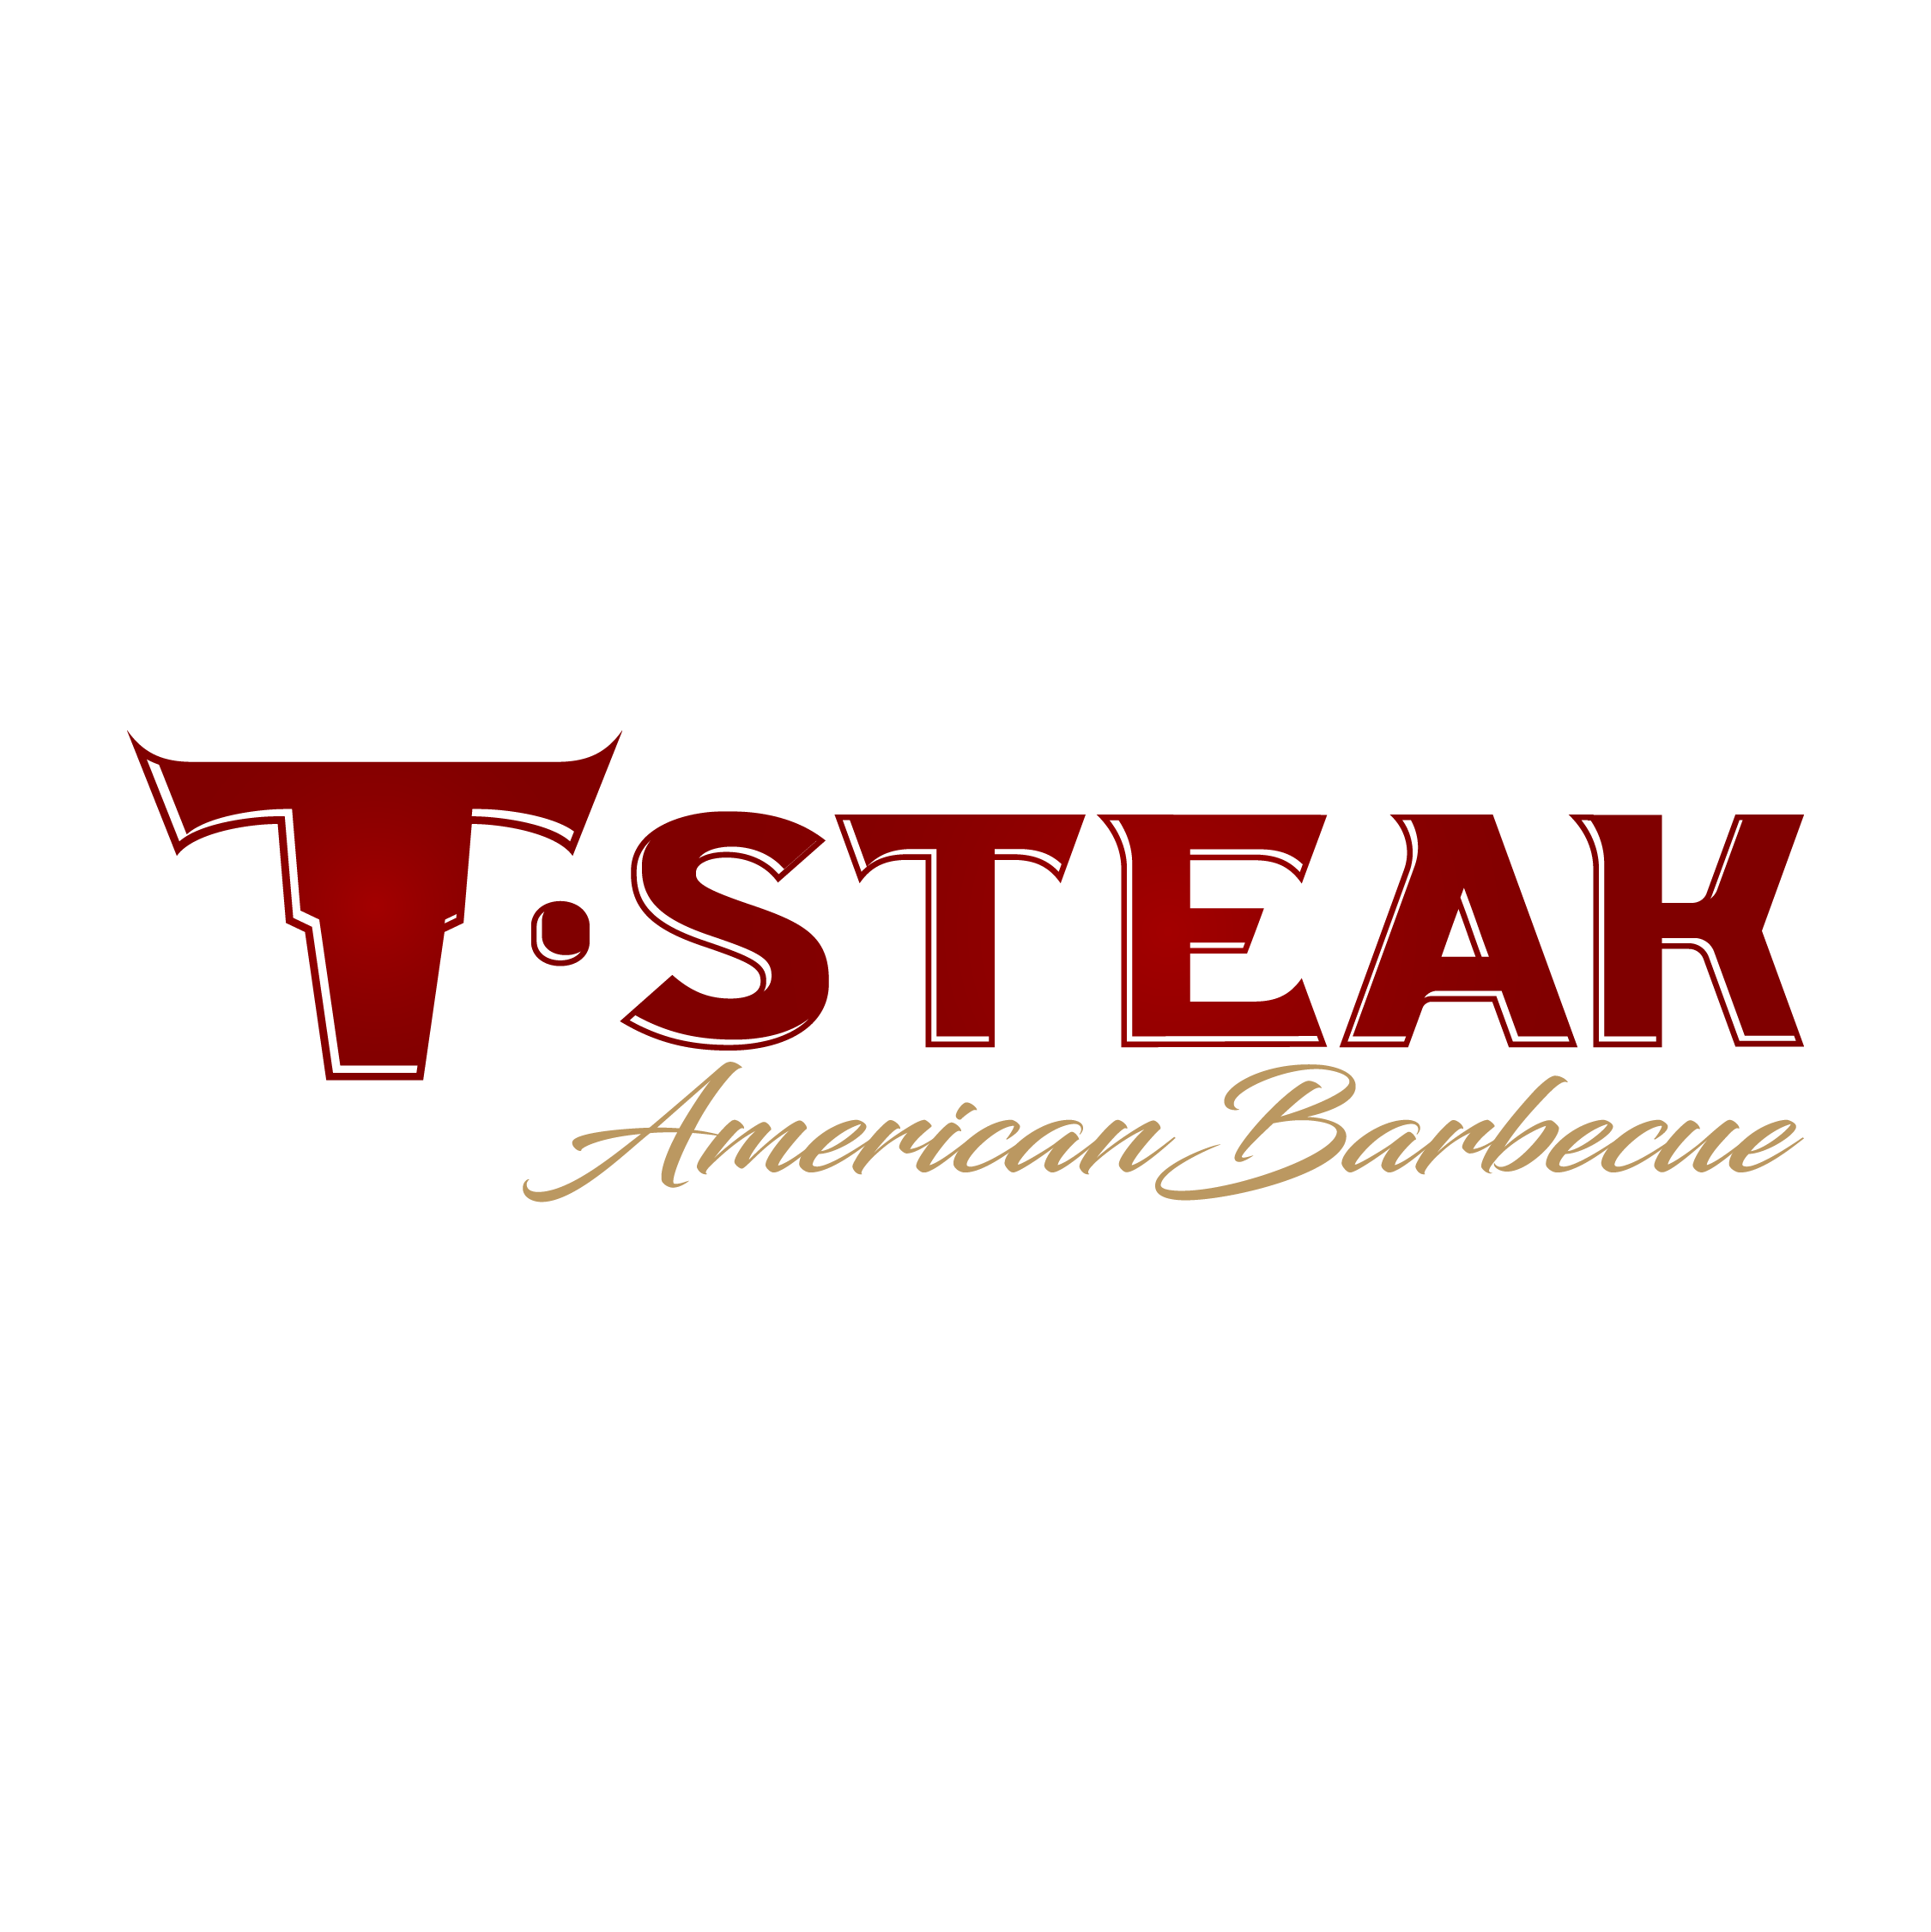 T-Steak